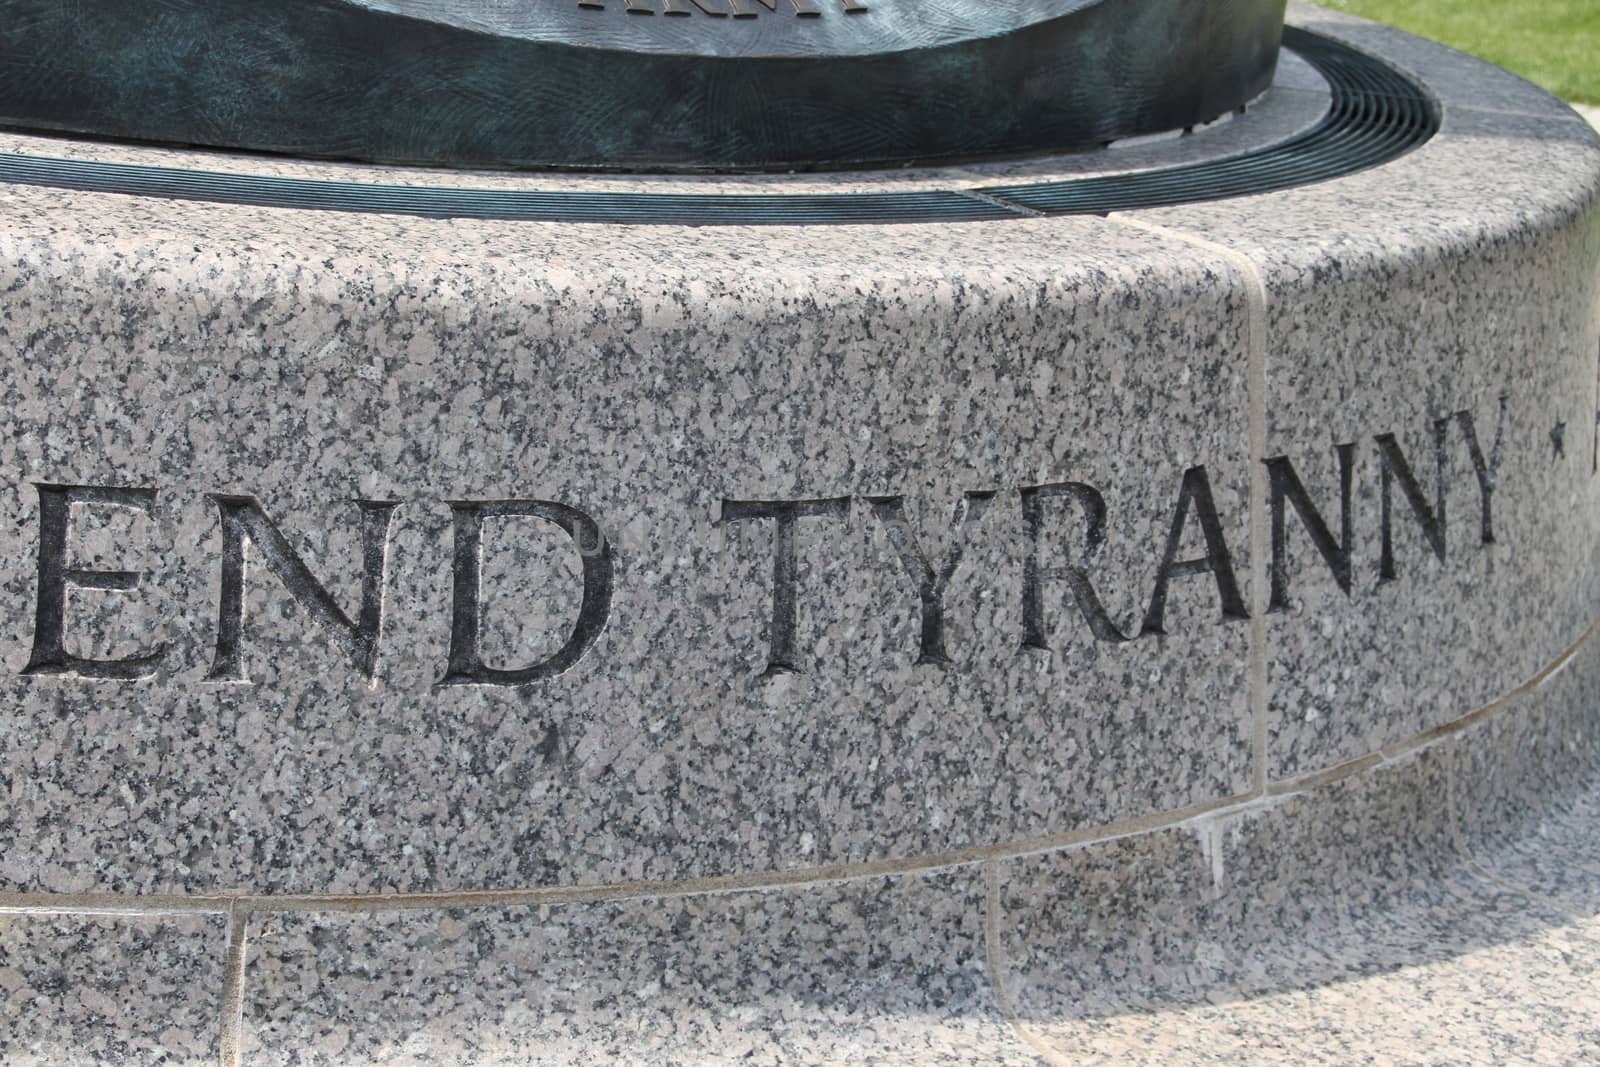 Washington DC, USA - may 13, 2012. End tyranny - the inscription on the historical monomate in Washington, USA